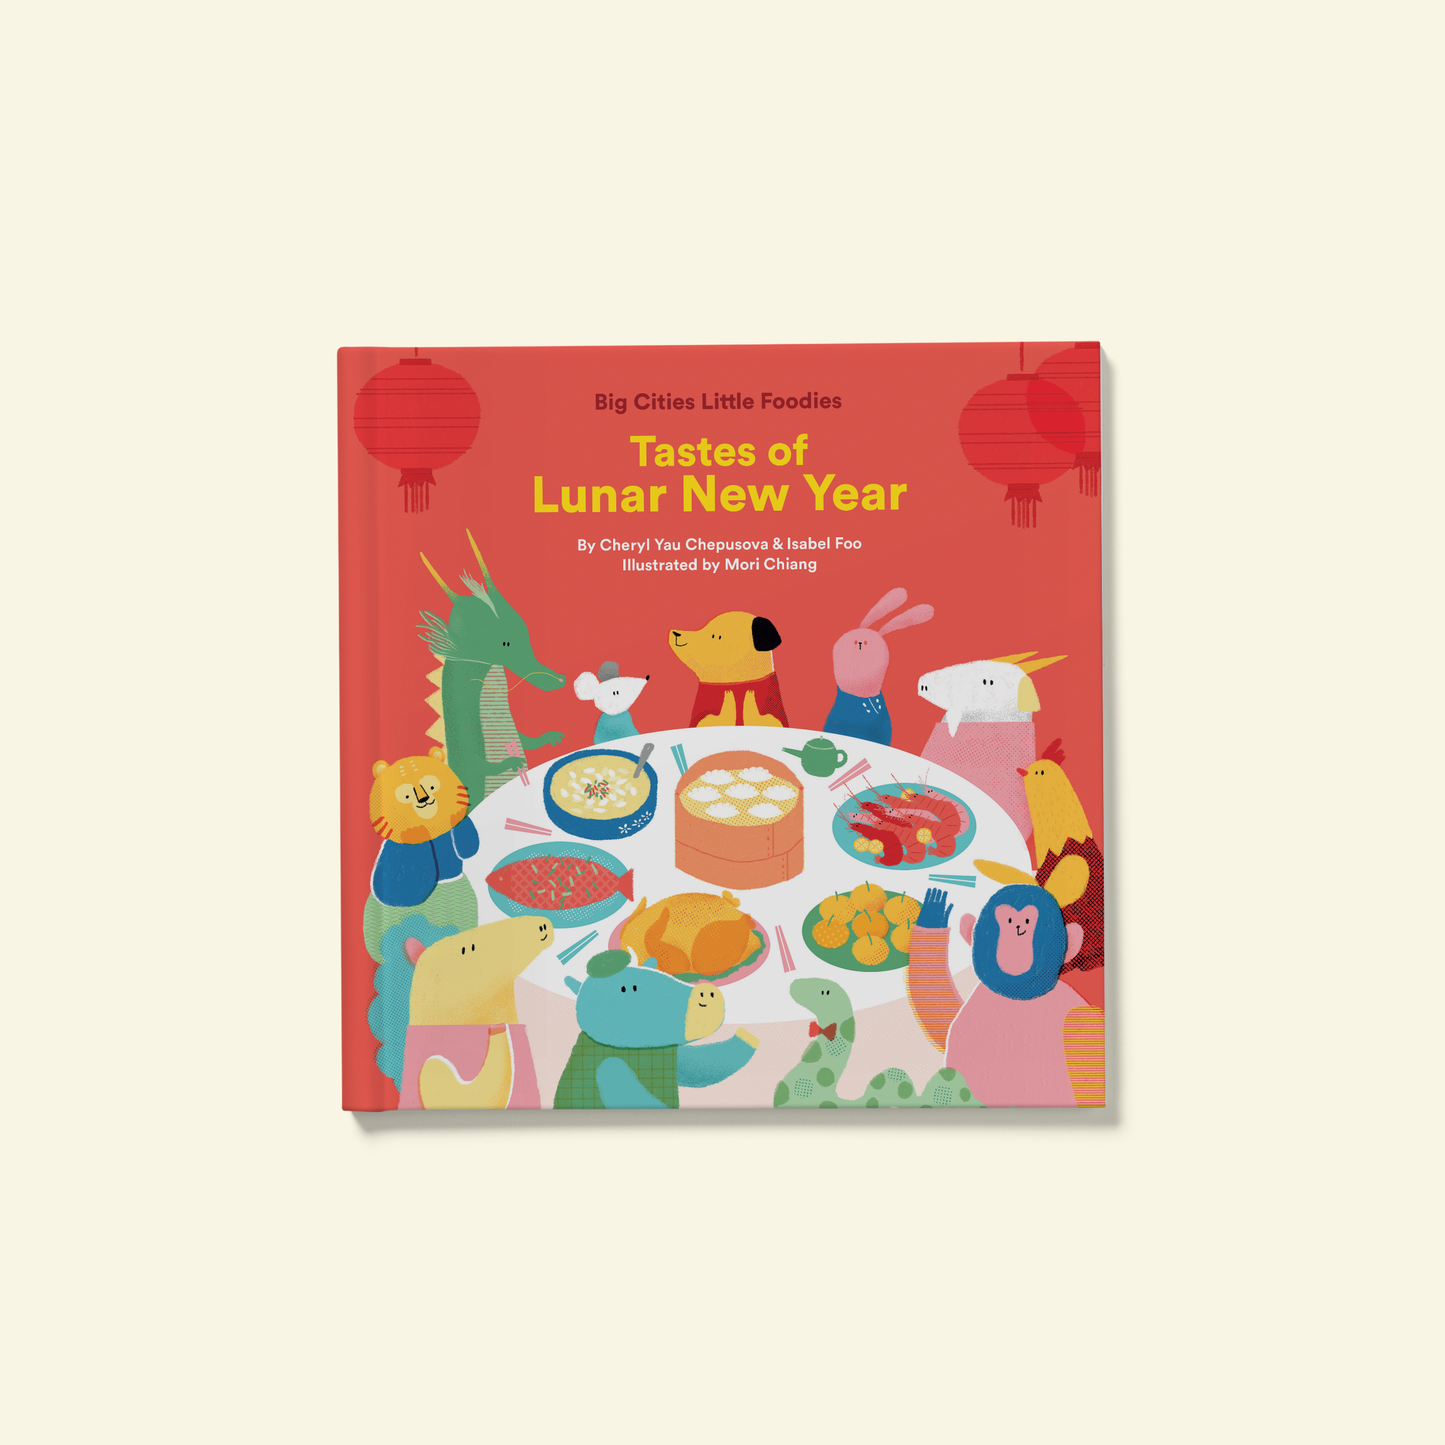 Children's book titled "Tastes of Lunar New Year" 